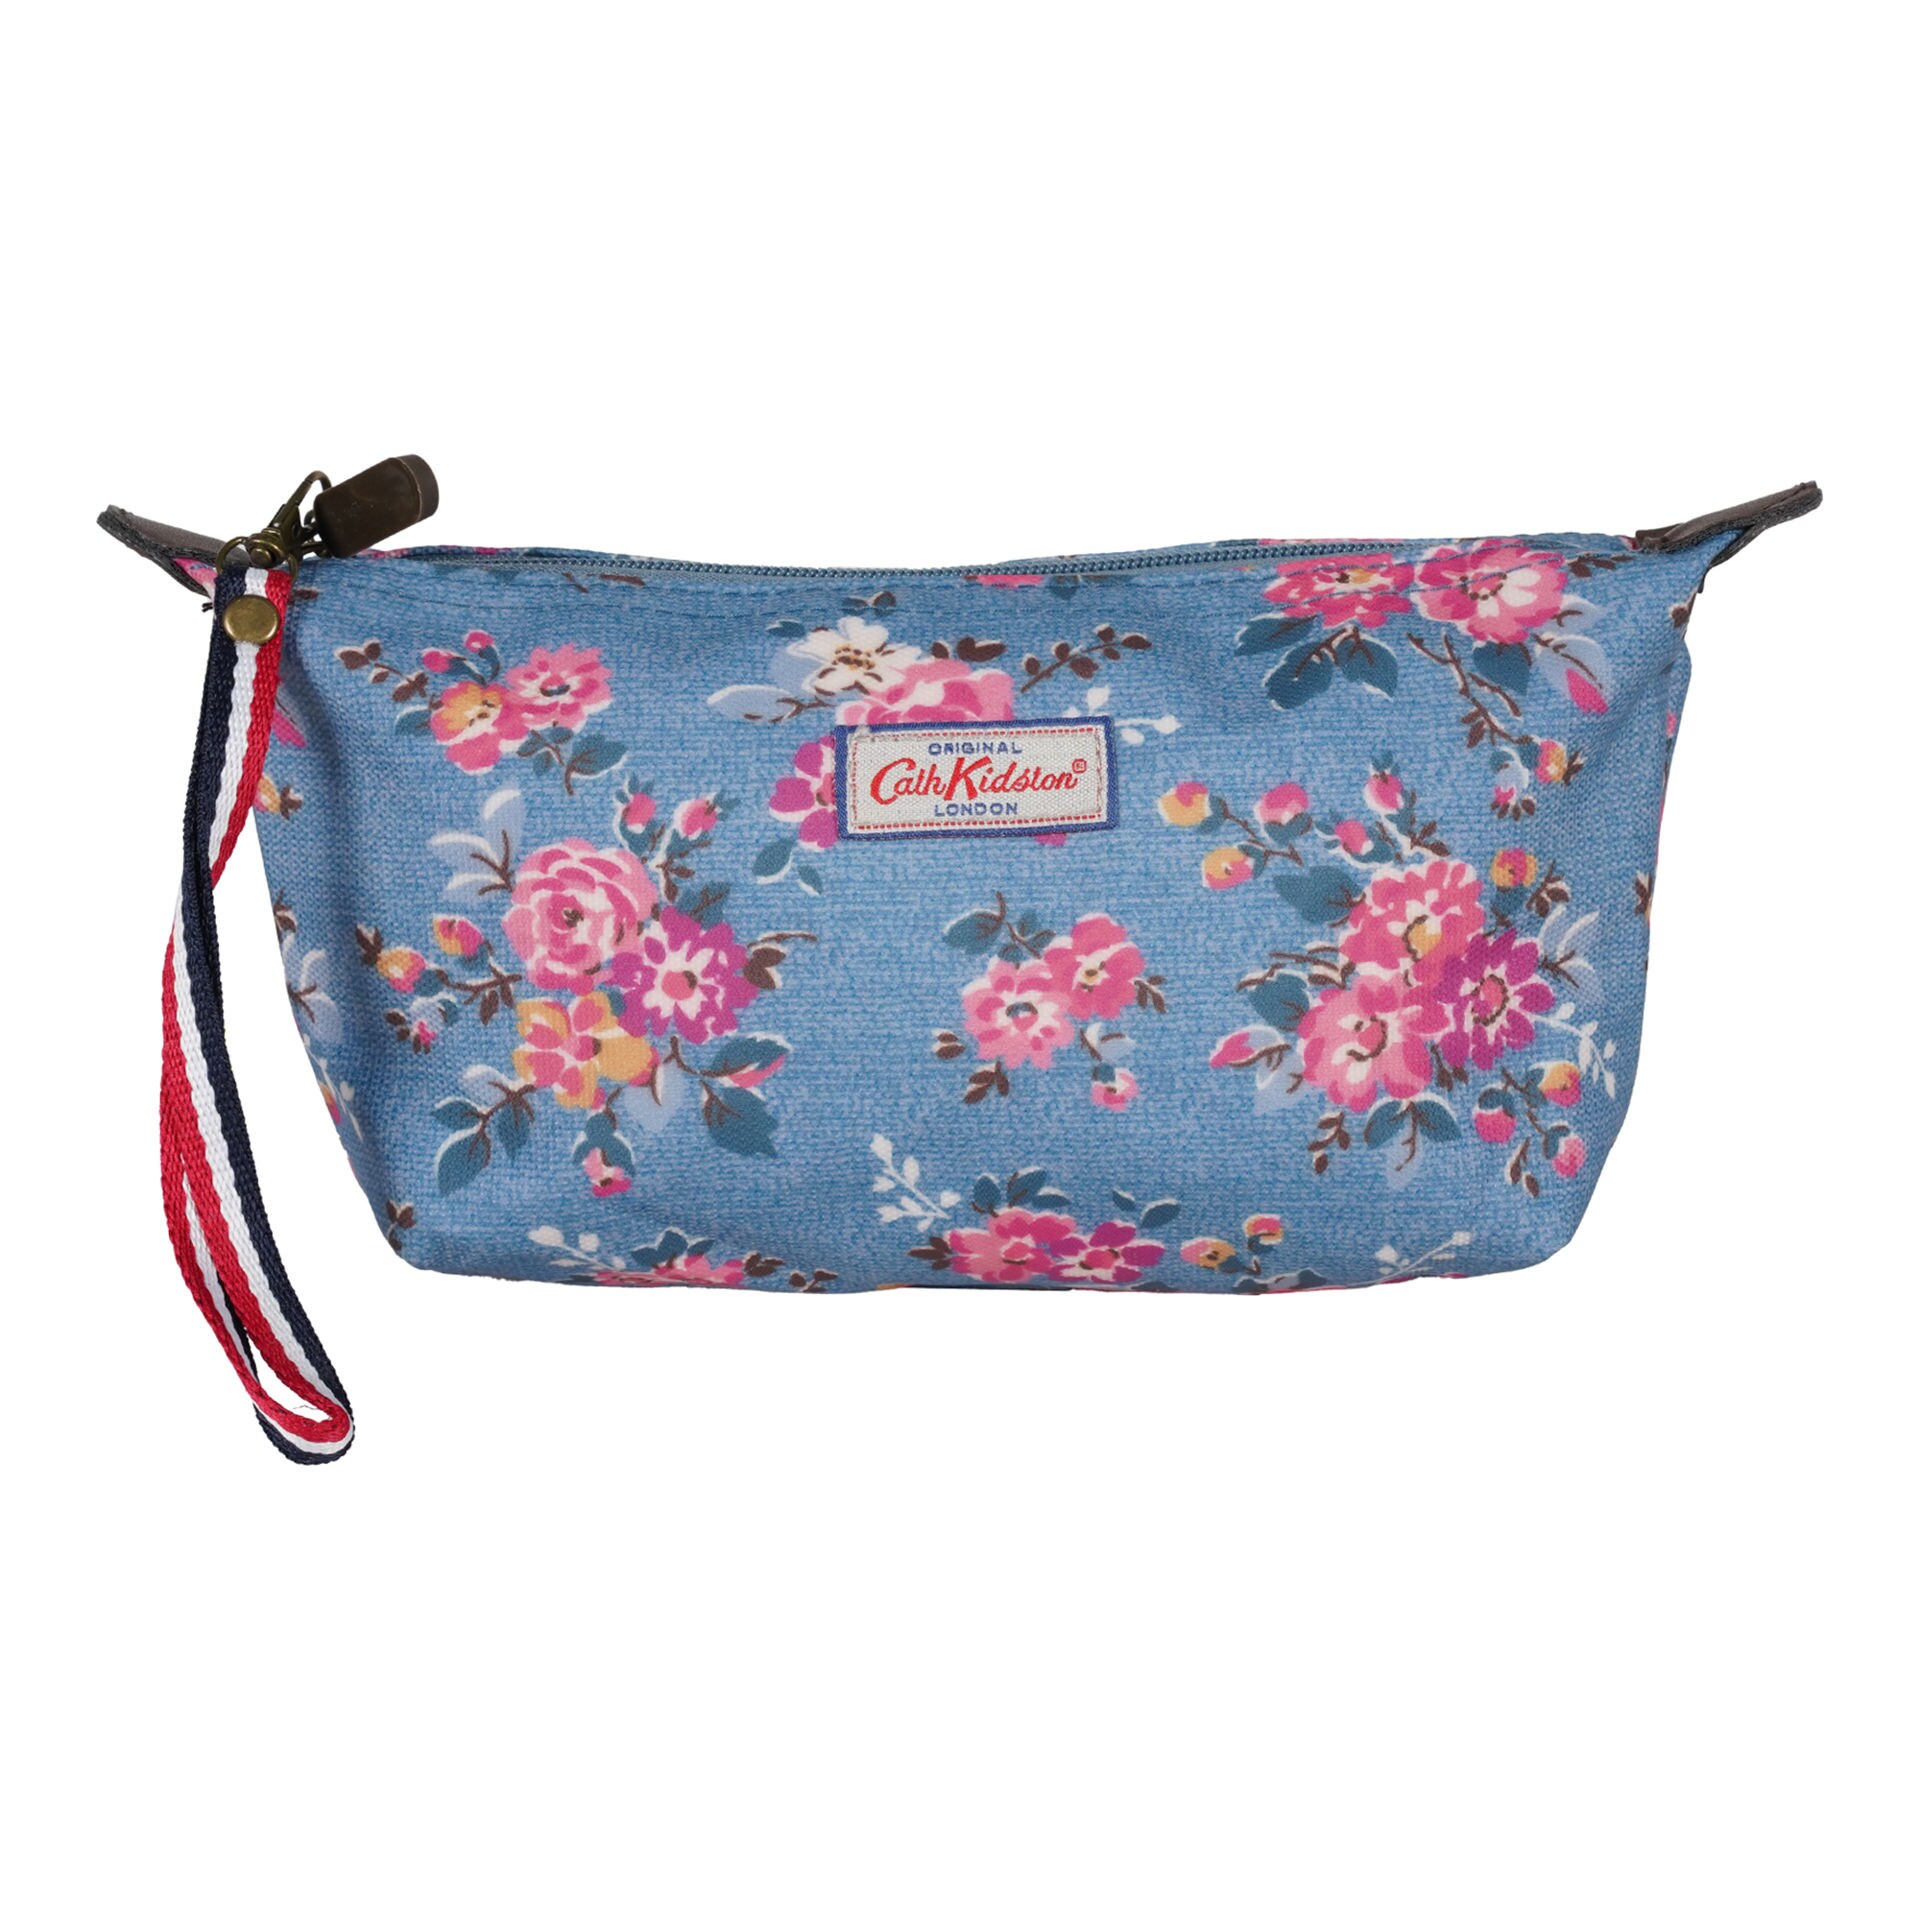 Cath Kidston Floral Bags & Handbags for Women for sale | eBay